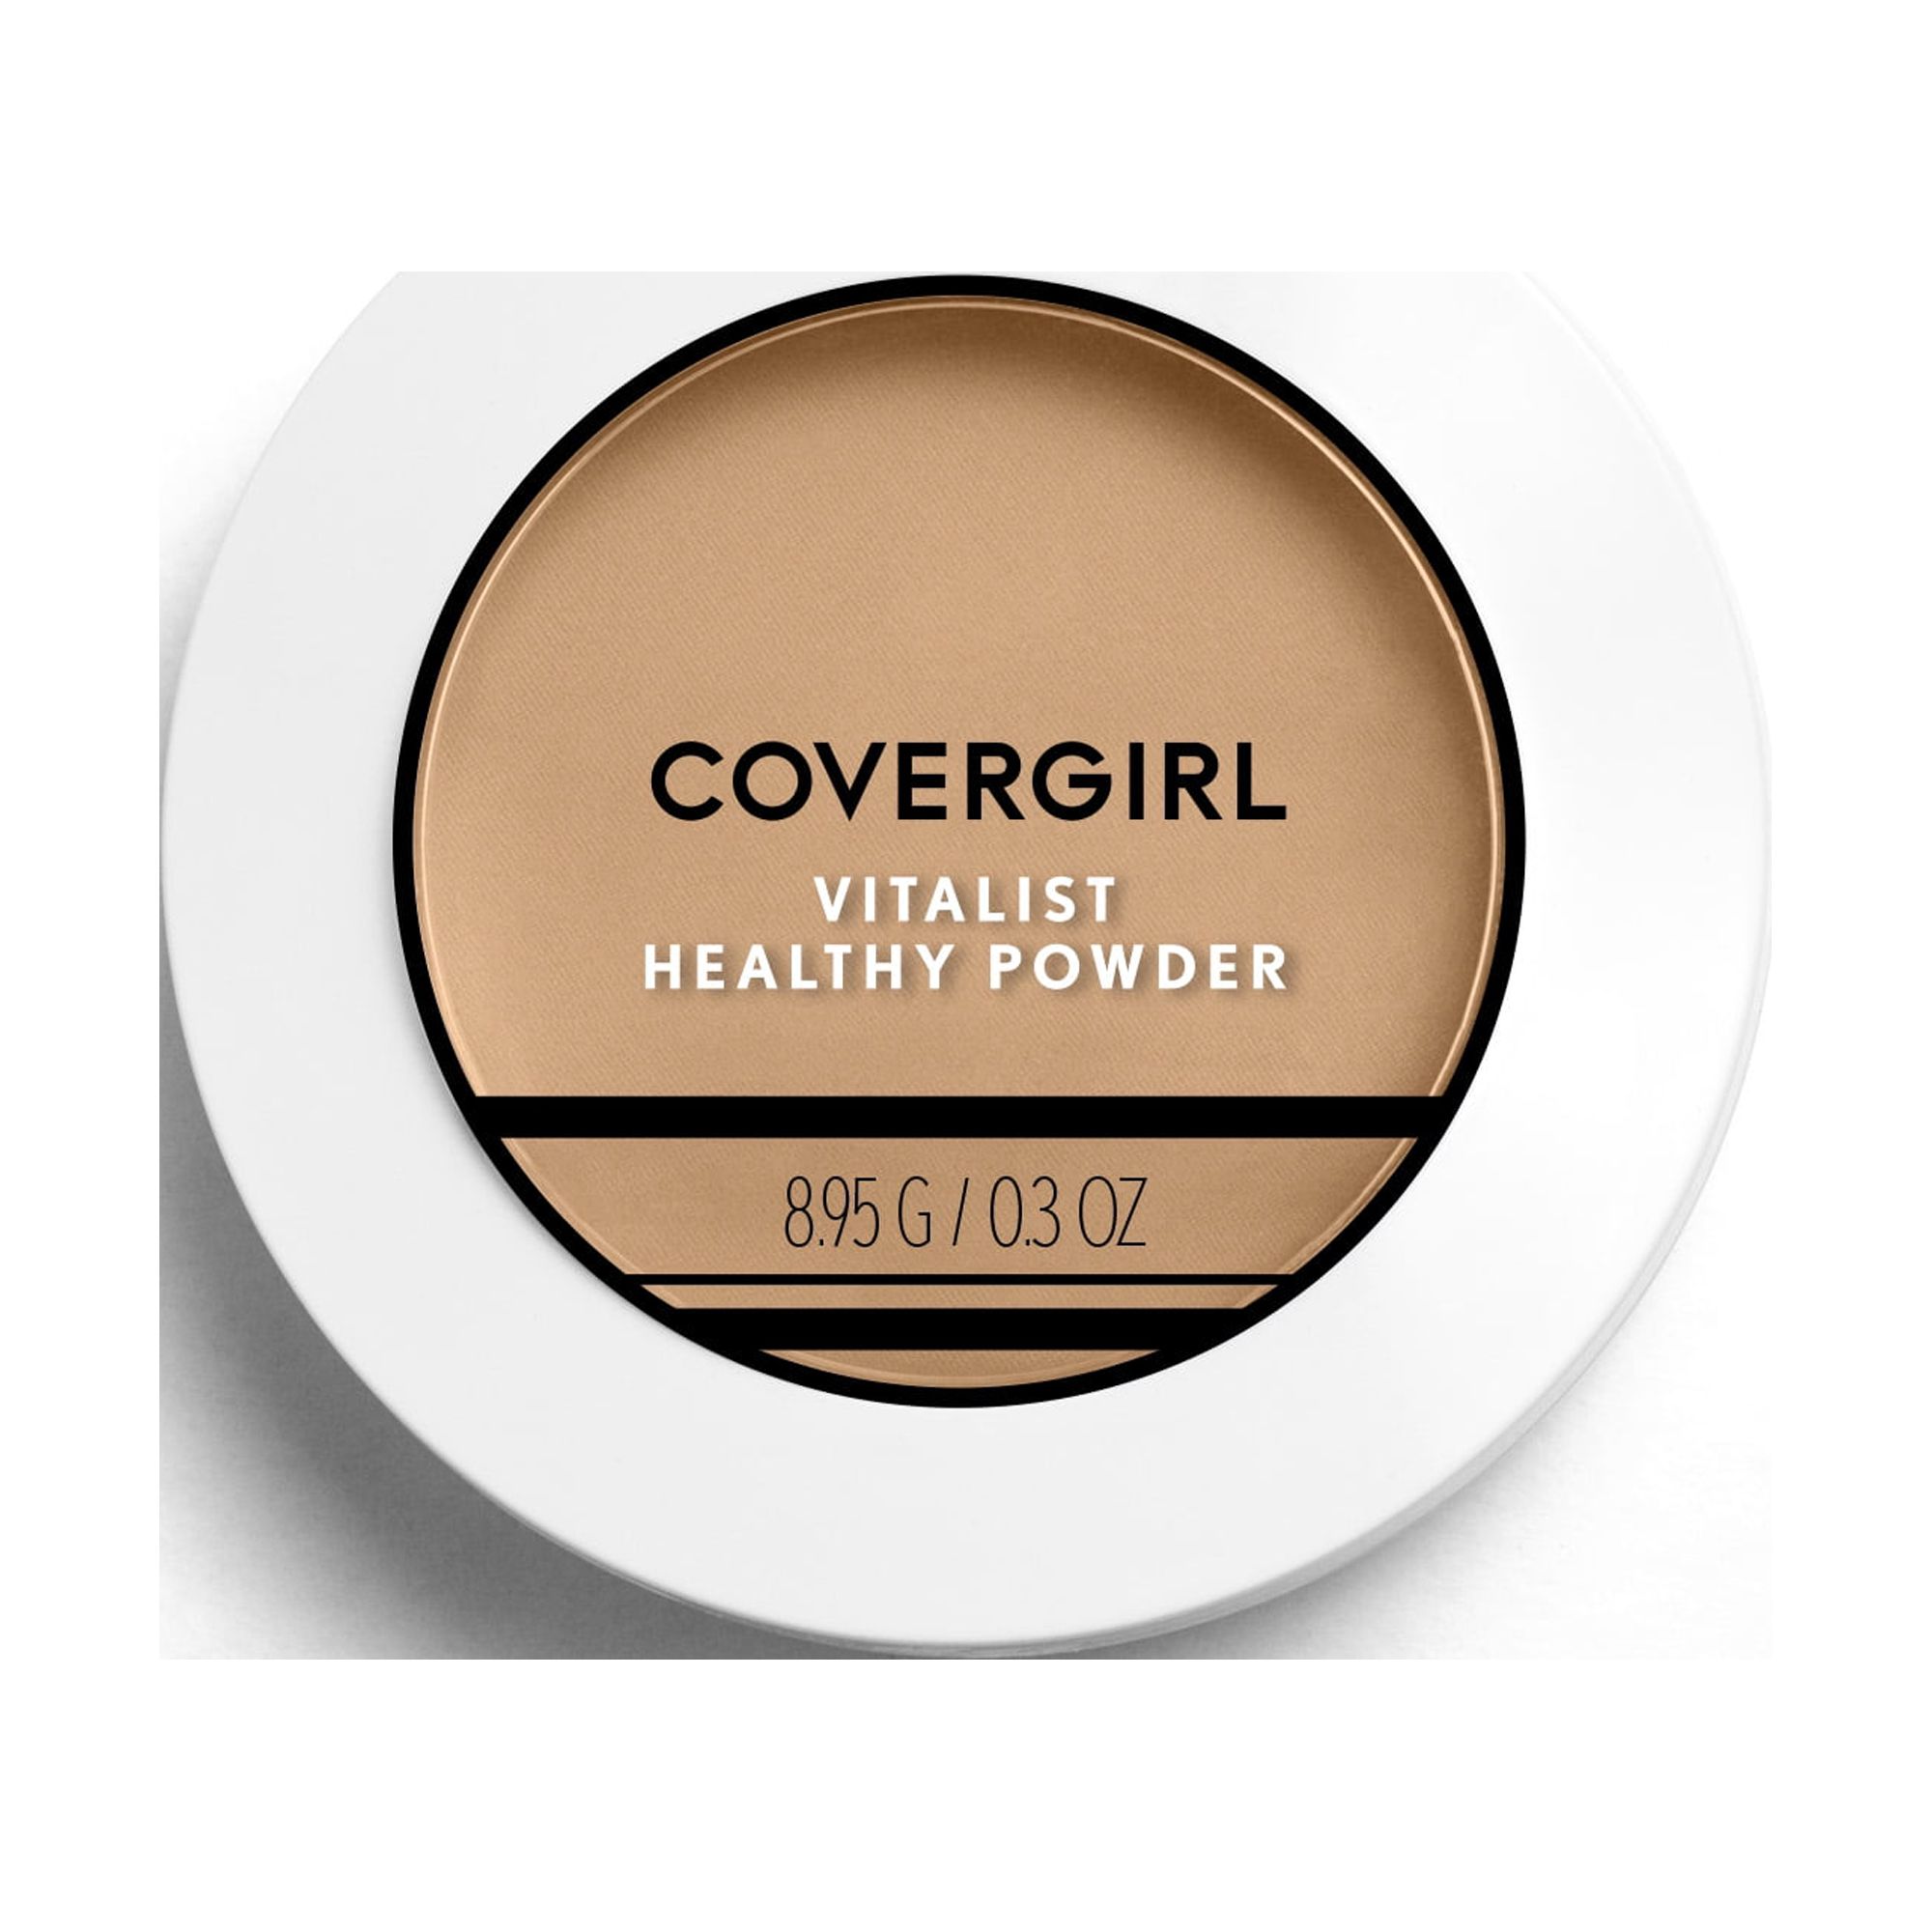 COVERGIRL Vitalist Healthy Powder, 745 Warm Beige - image 2 of 3